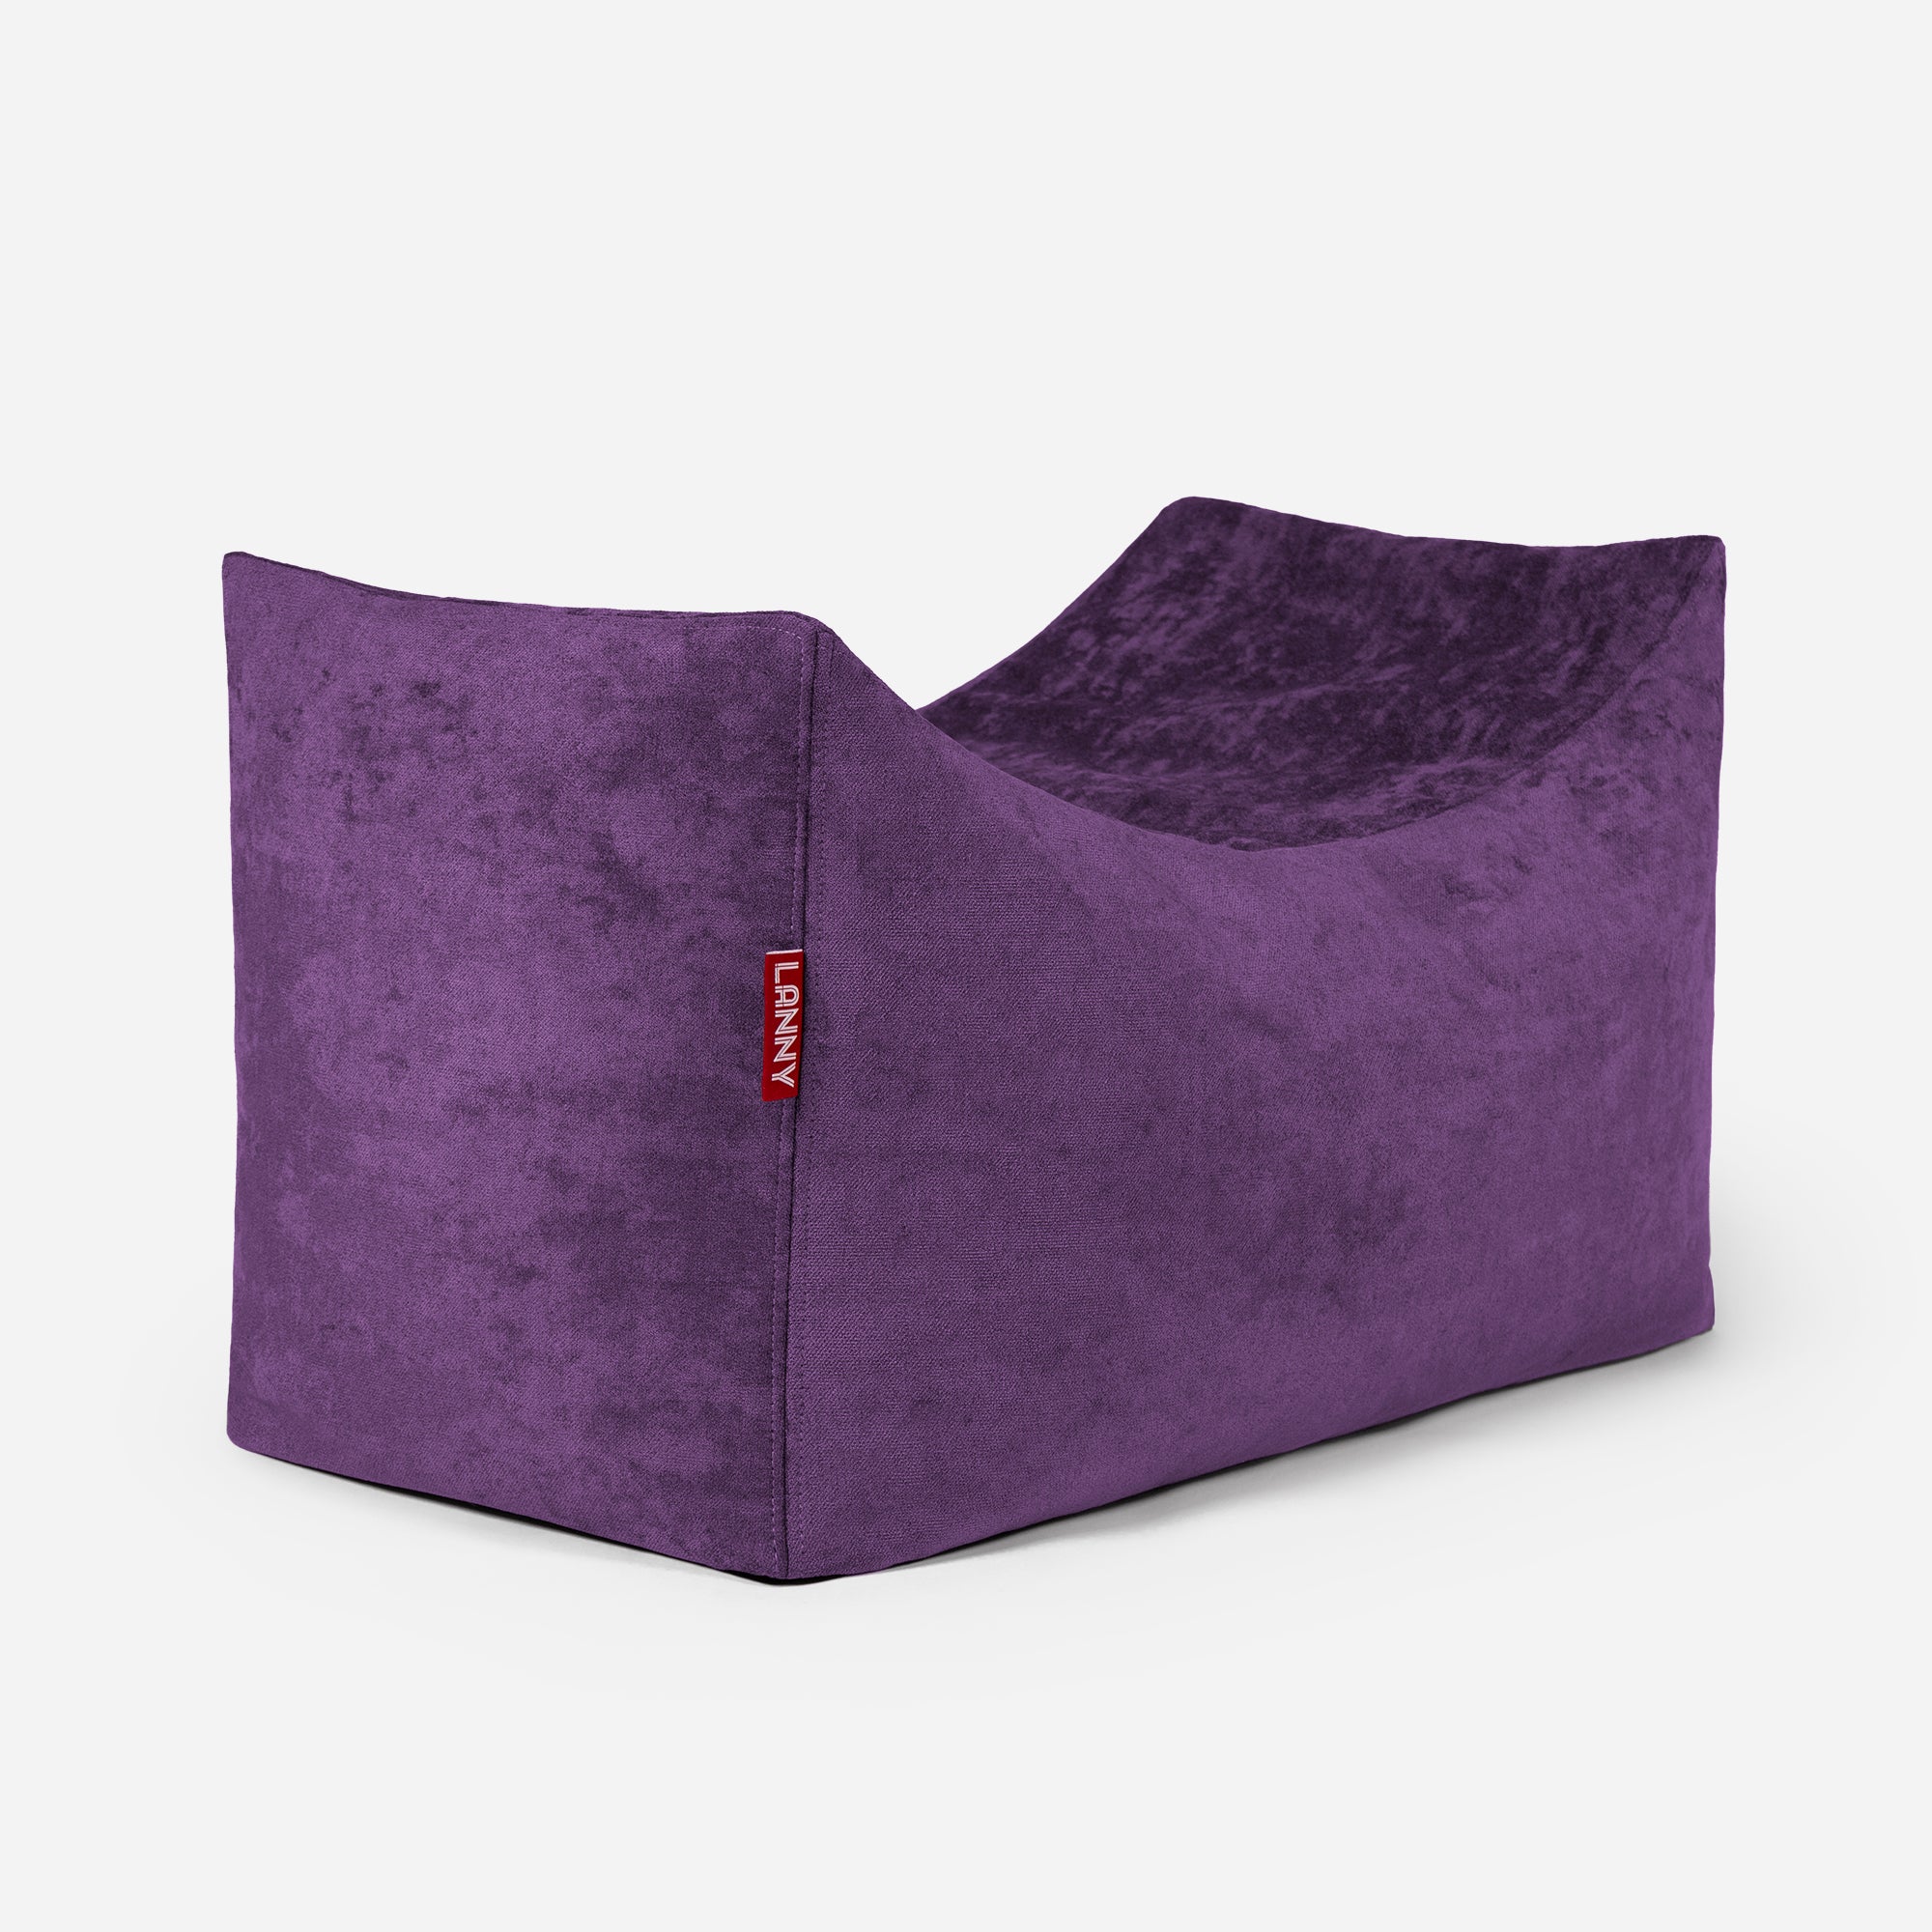 Quadro Aldo Violet Bean bag Chair